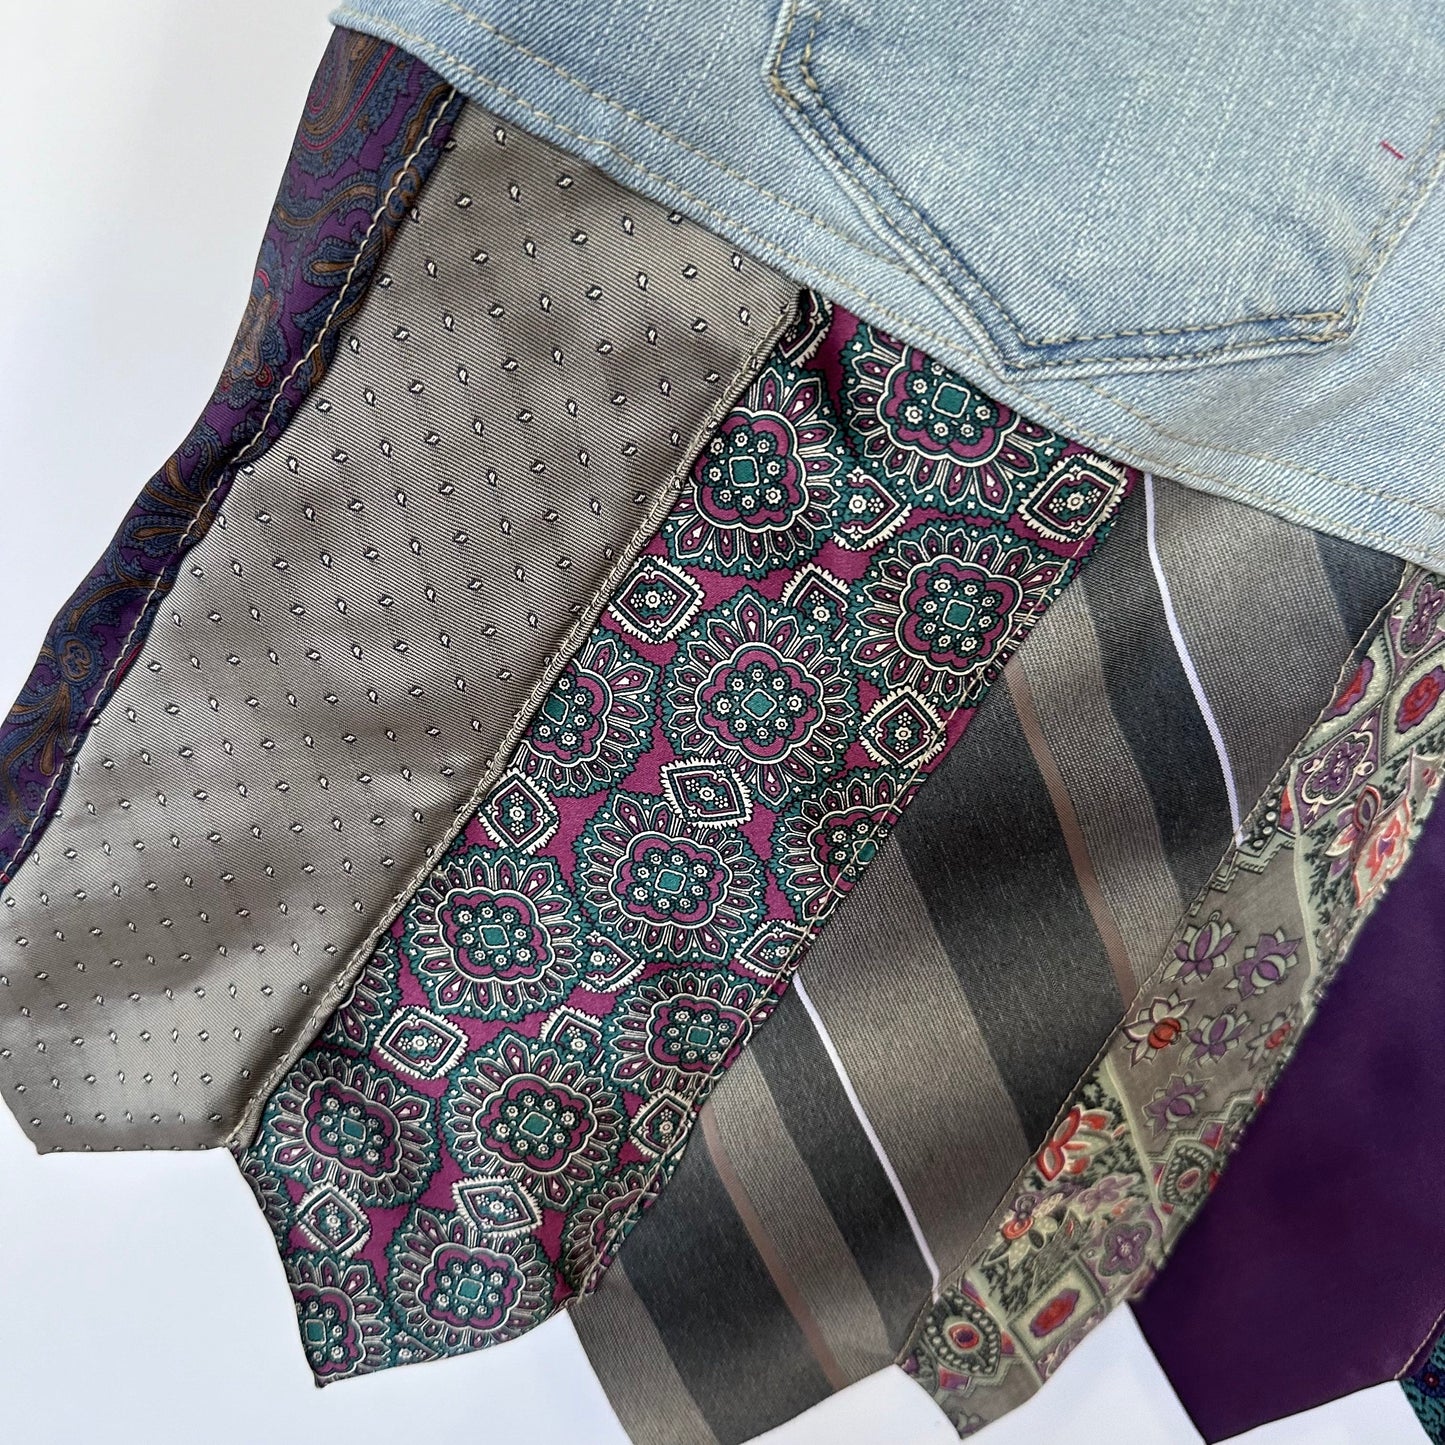 distress denim meets purple power tie skirt, (size 5)